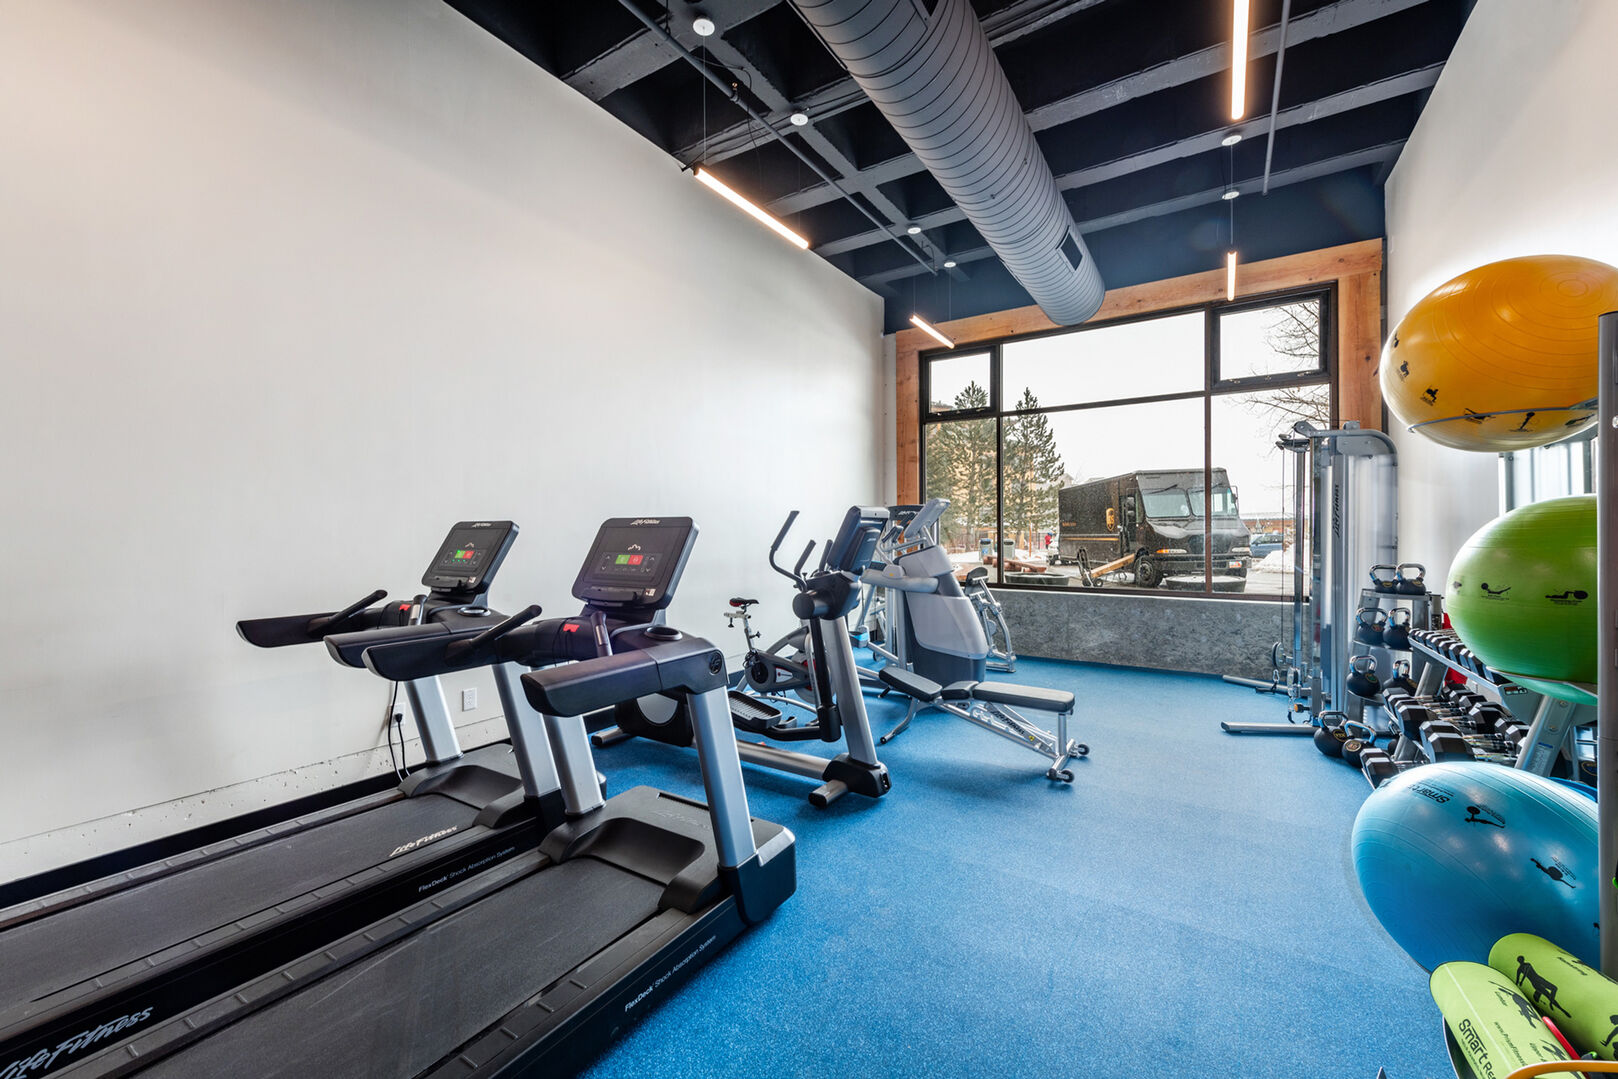 Sundial Lodge fitness room with cardio machines